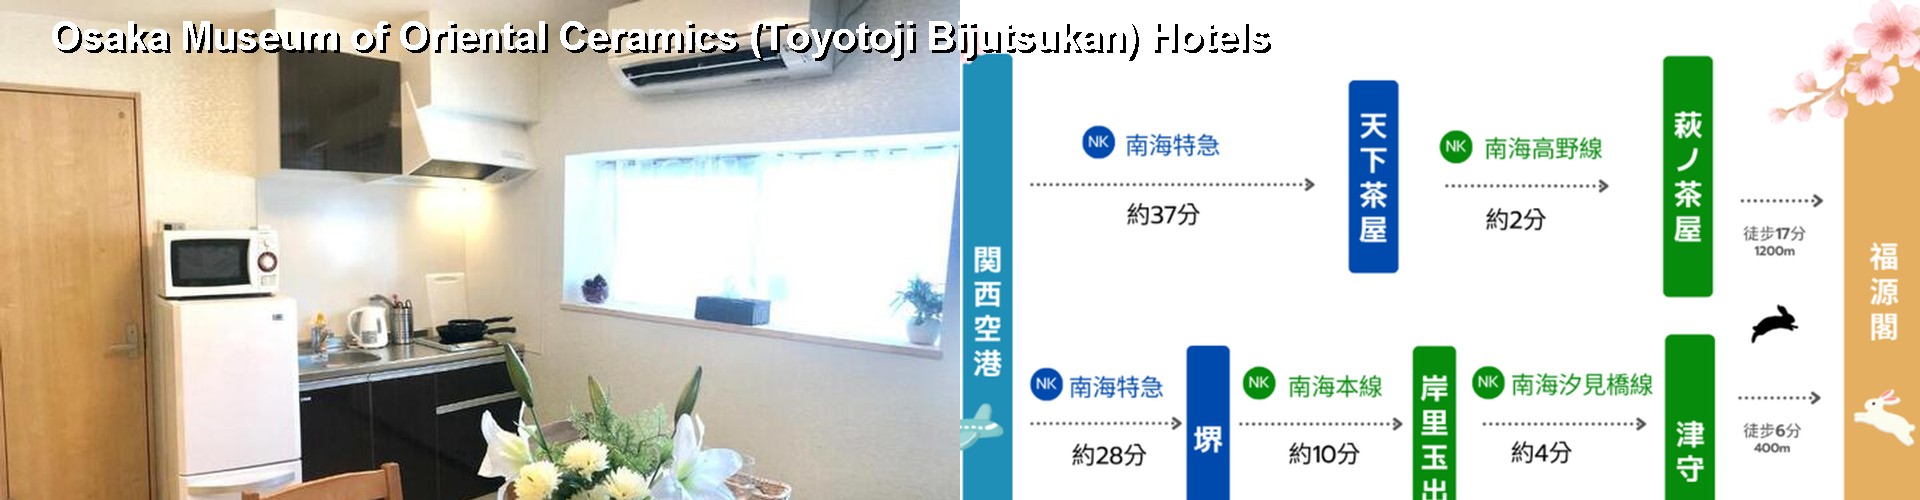 5 Best Hotels near Osaka Museum of Oriental Ceramics (Toyotoji Bijutsukan)